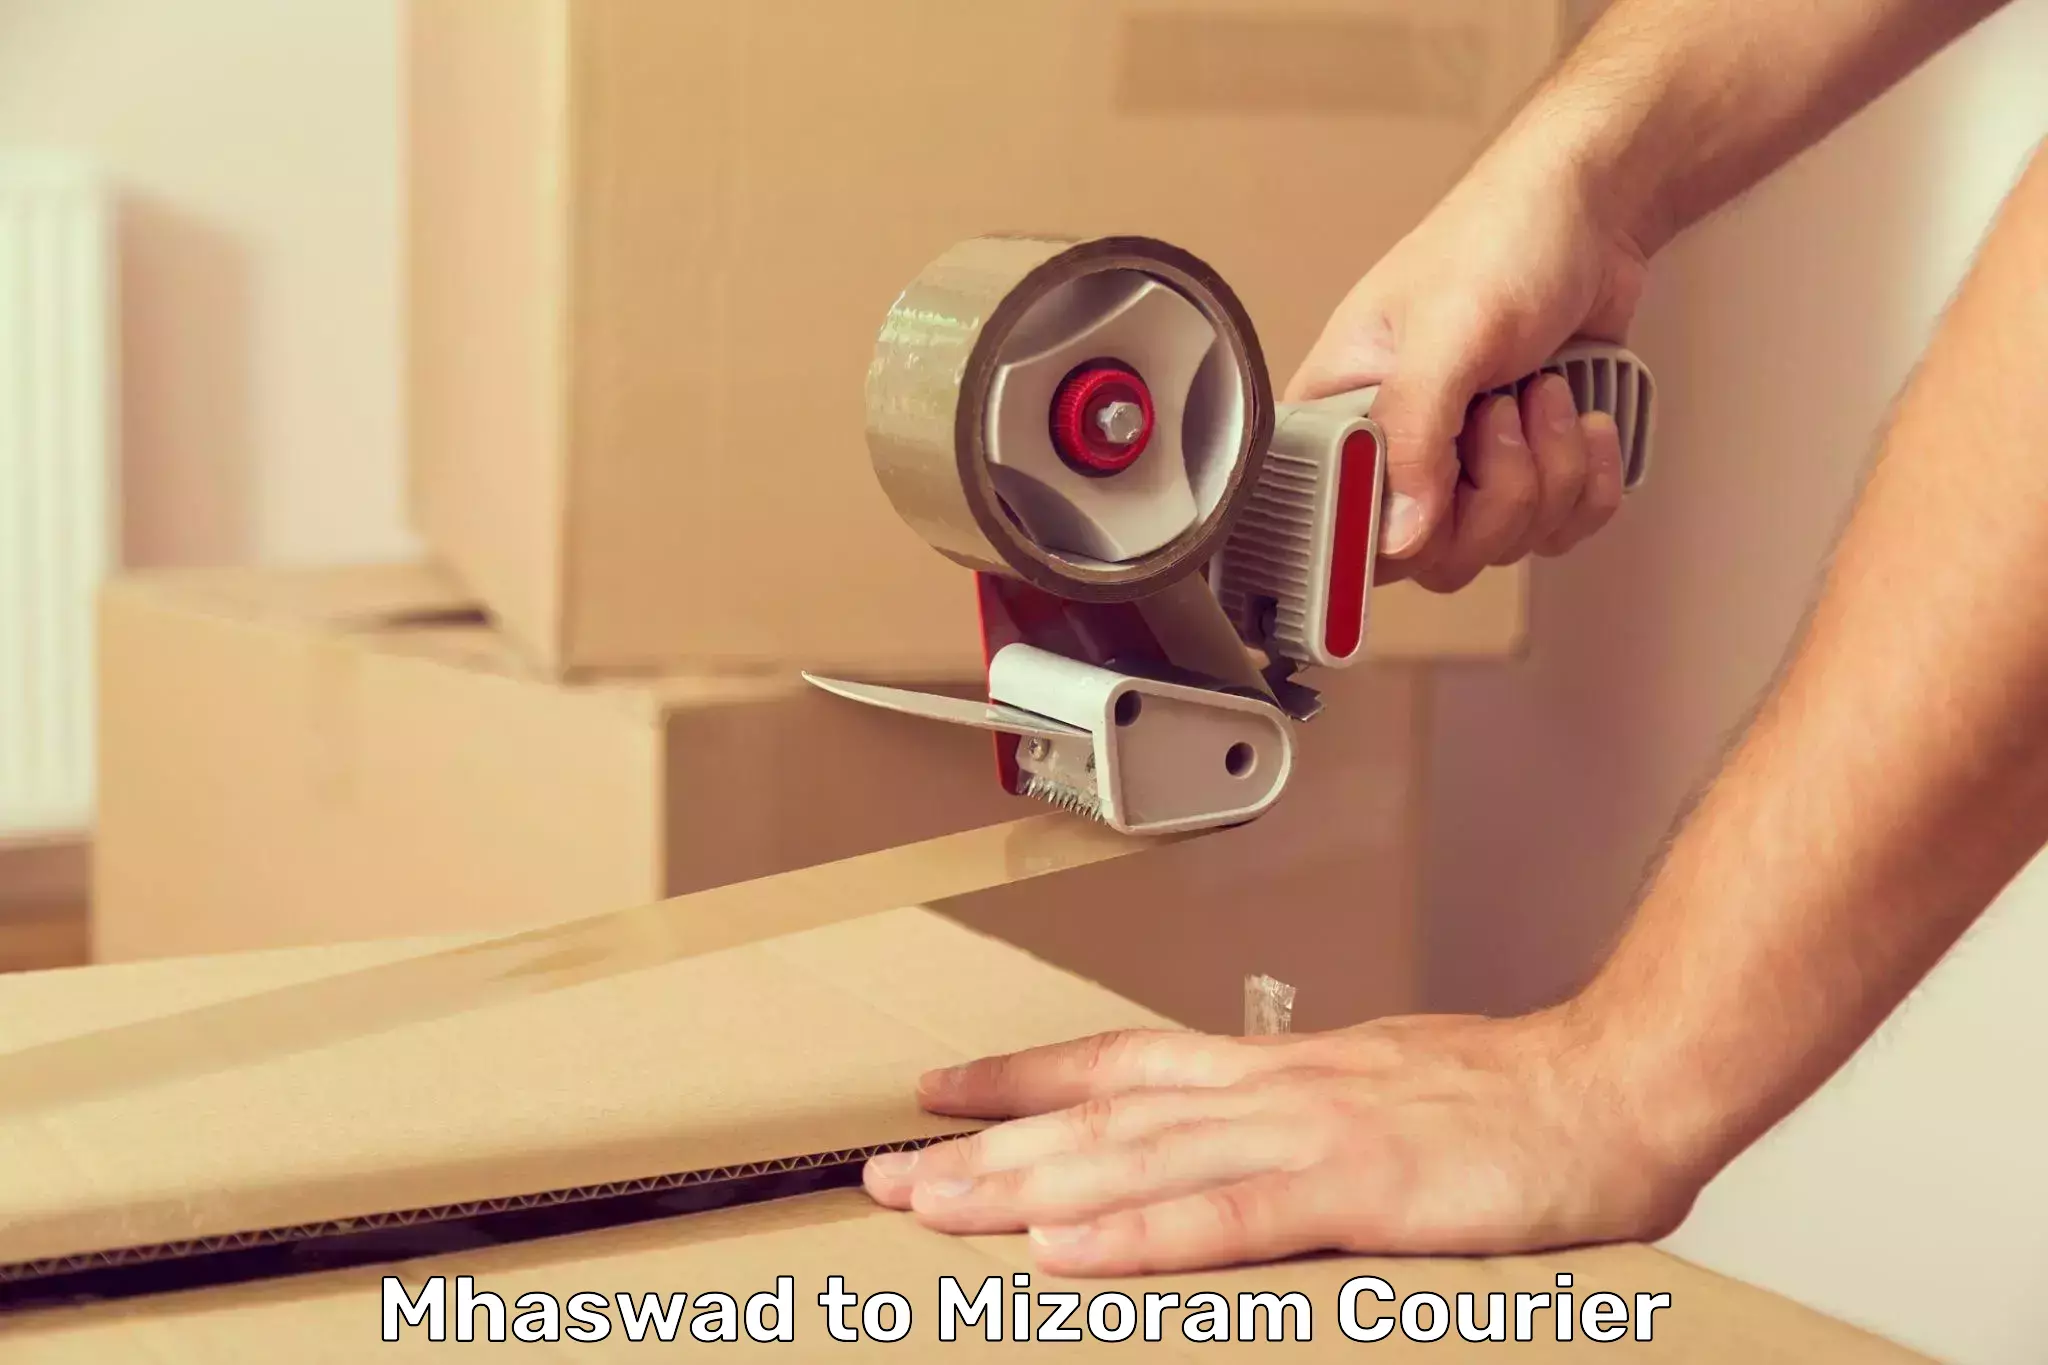 Modern courier technology Mhaswad to Mizoram